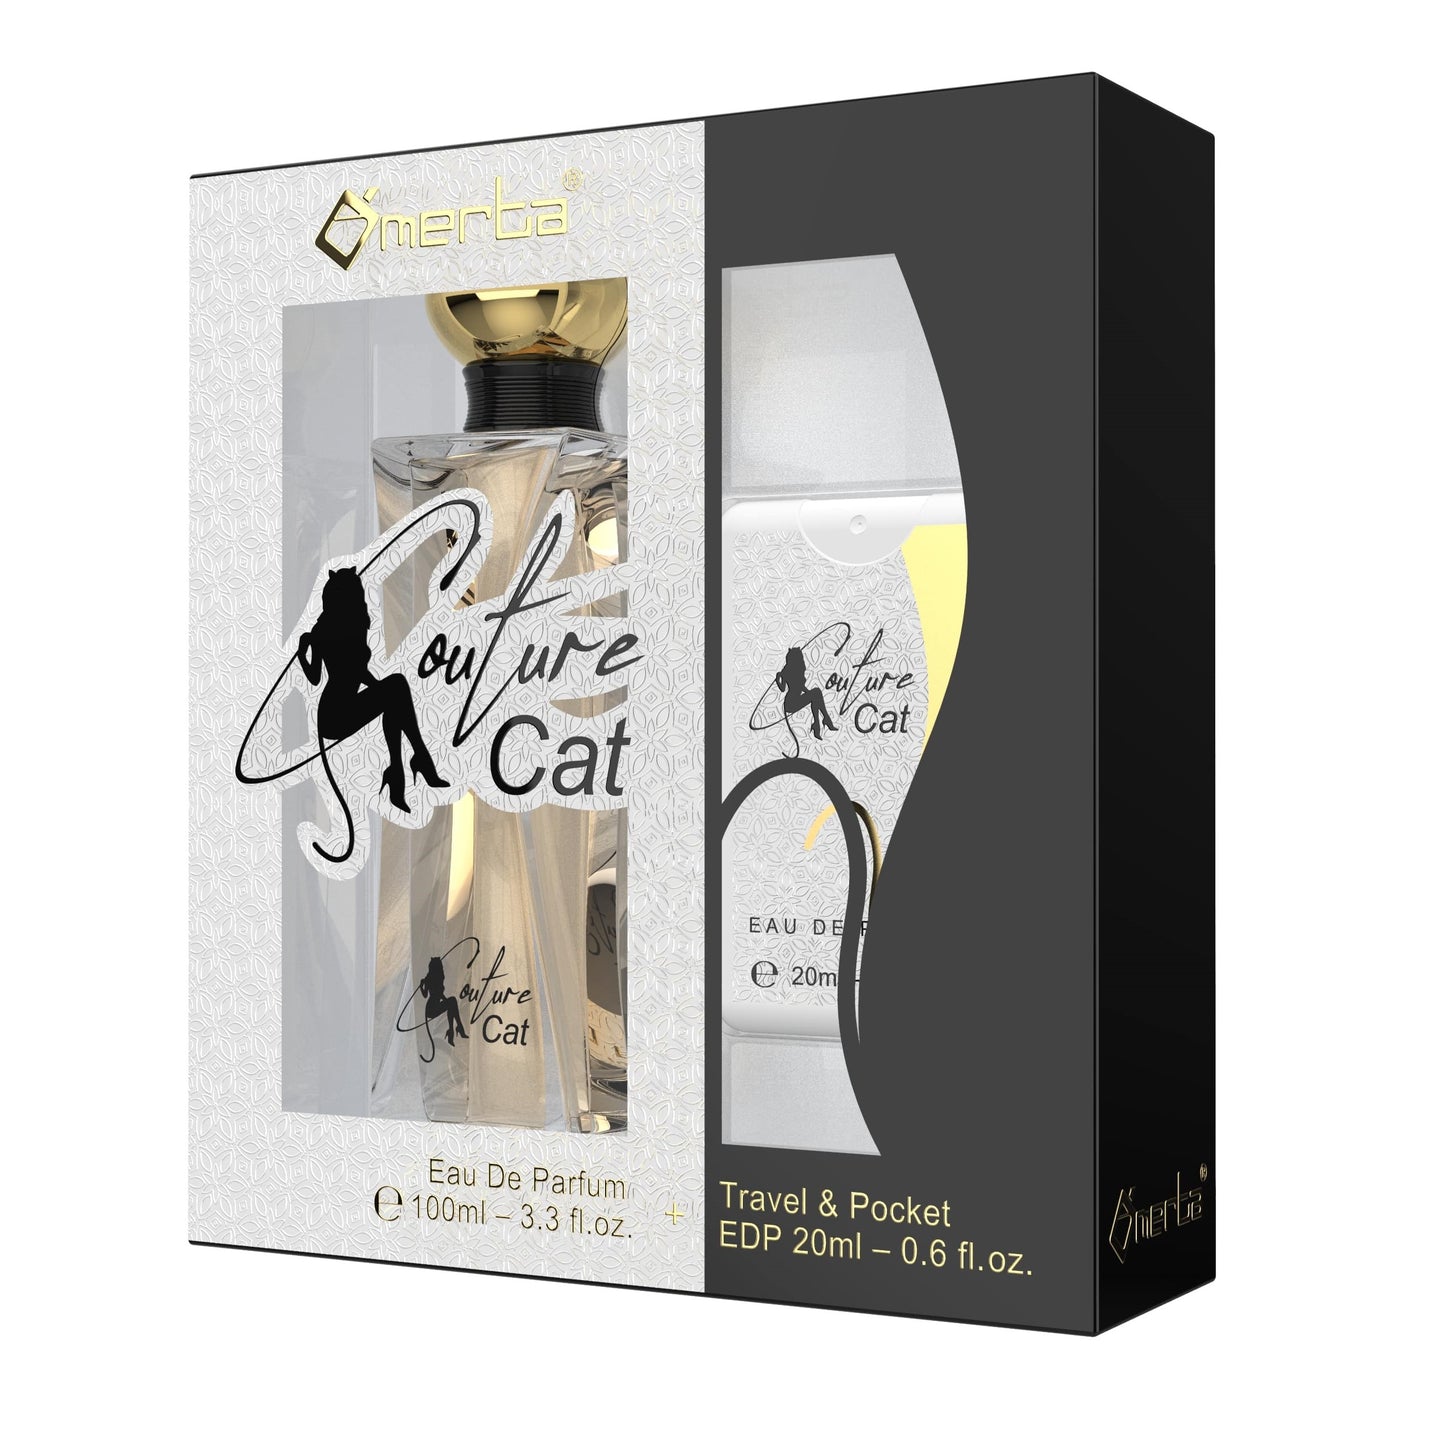 100 ml + 20 ml de Eau de Perfume "COUTURE CAT" Floral - Fragrância Frutal para Mulheres